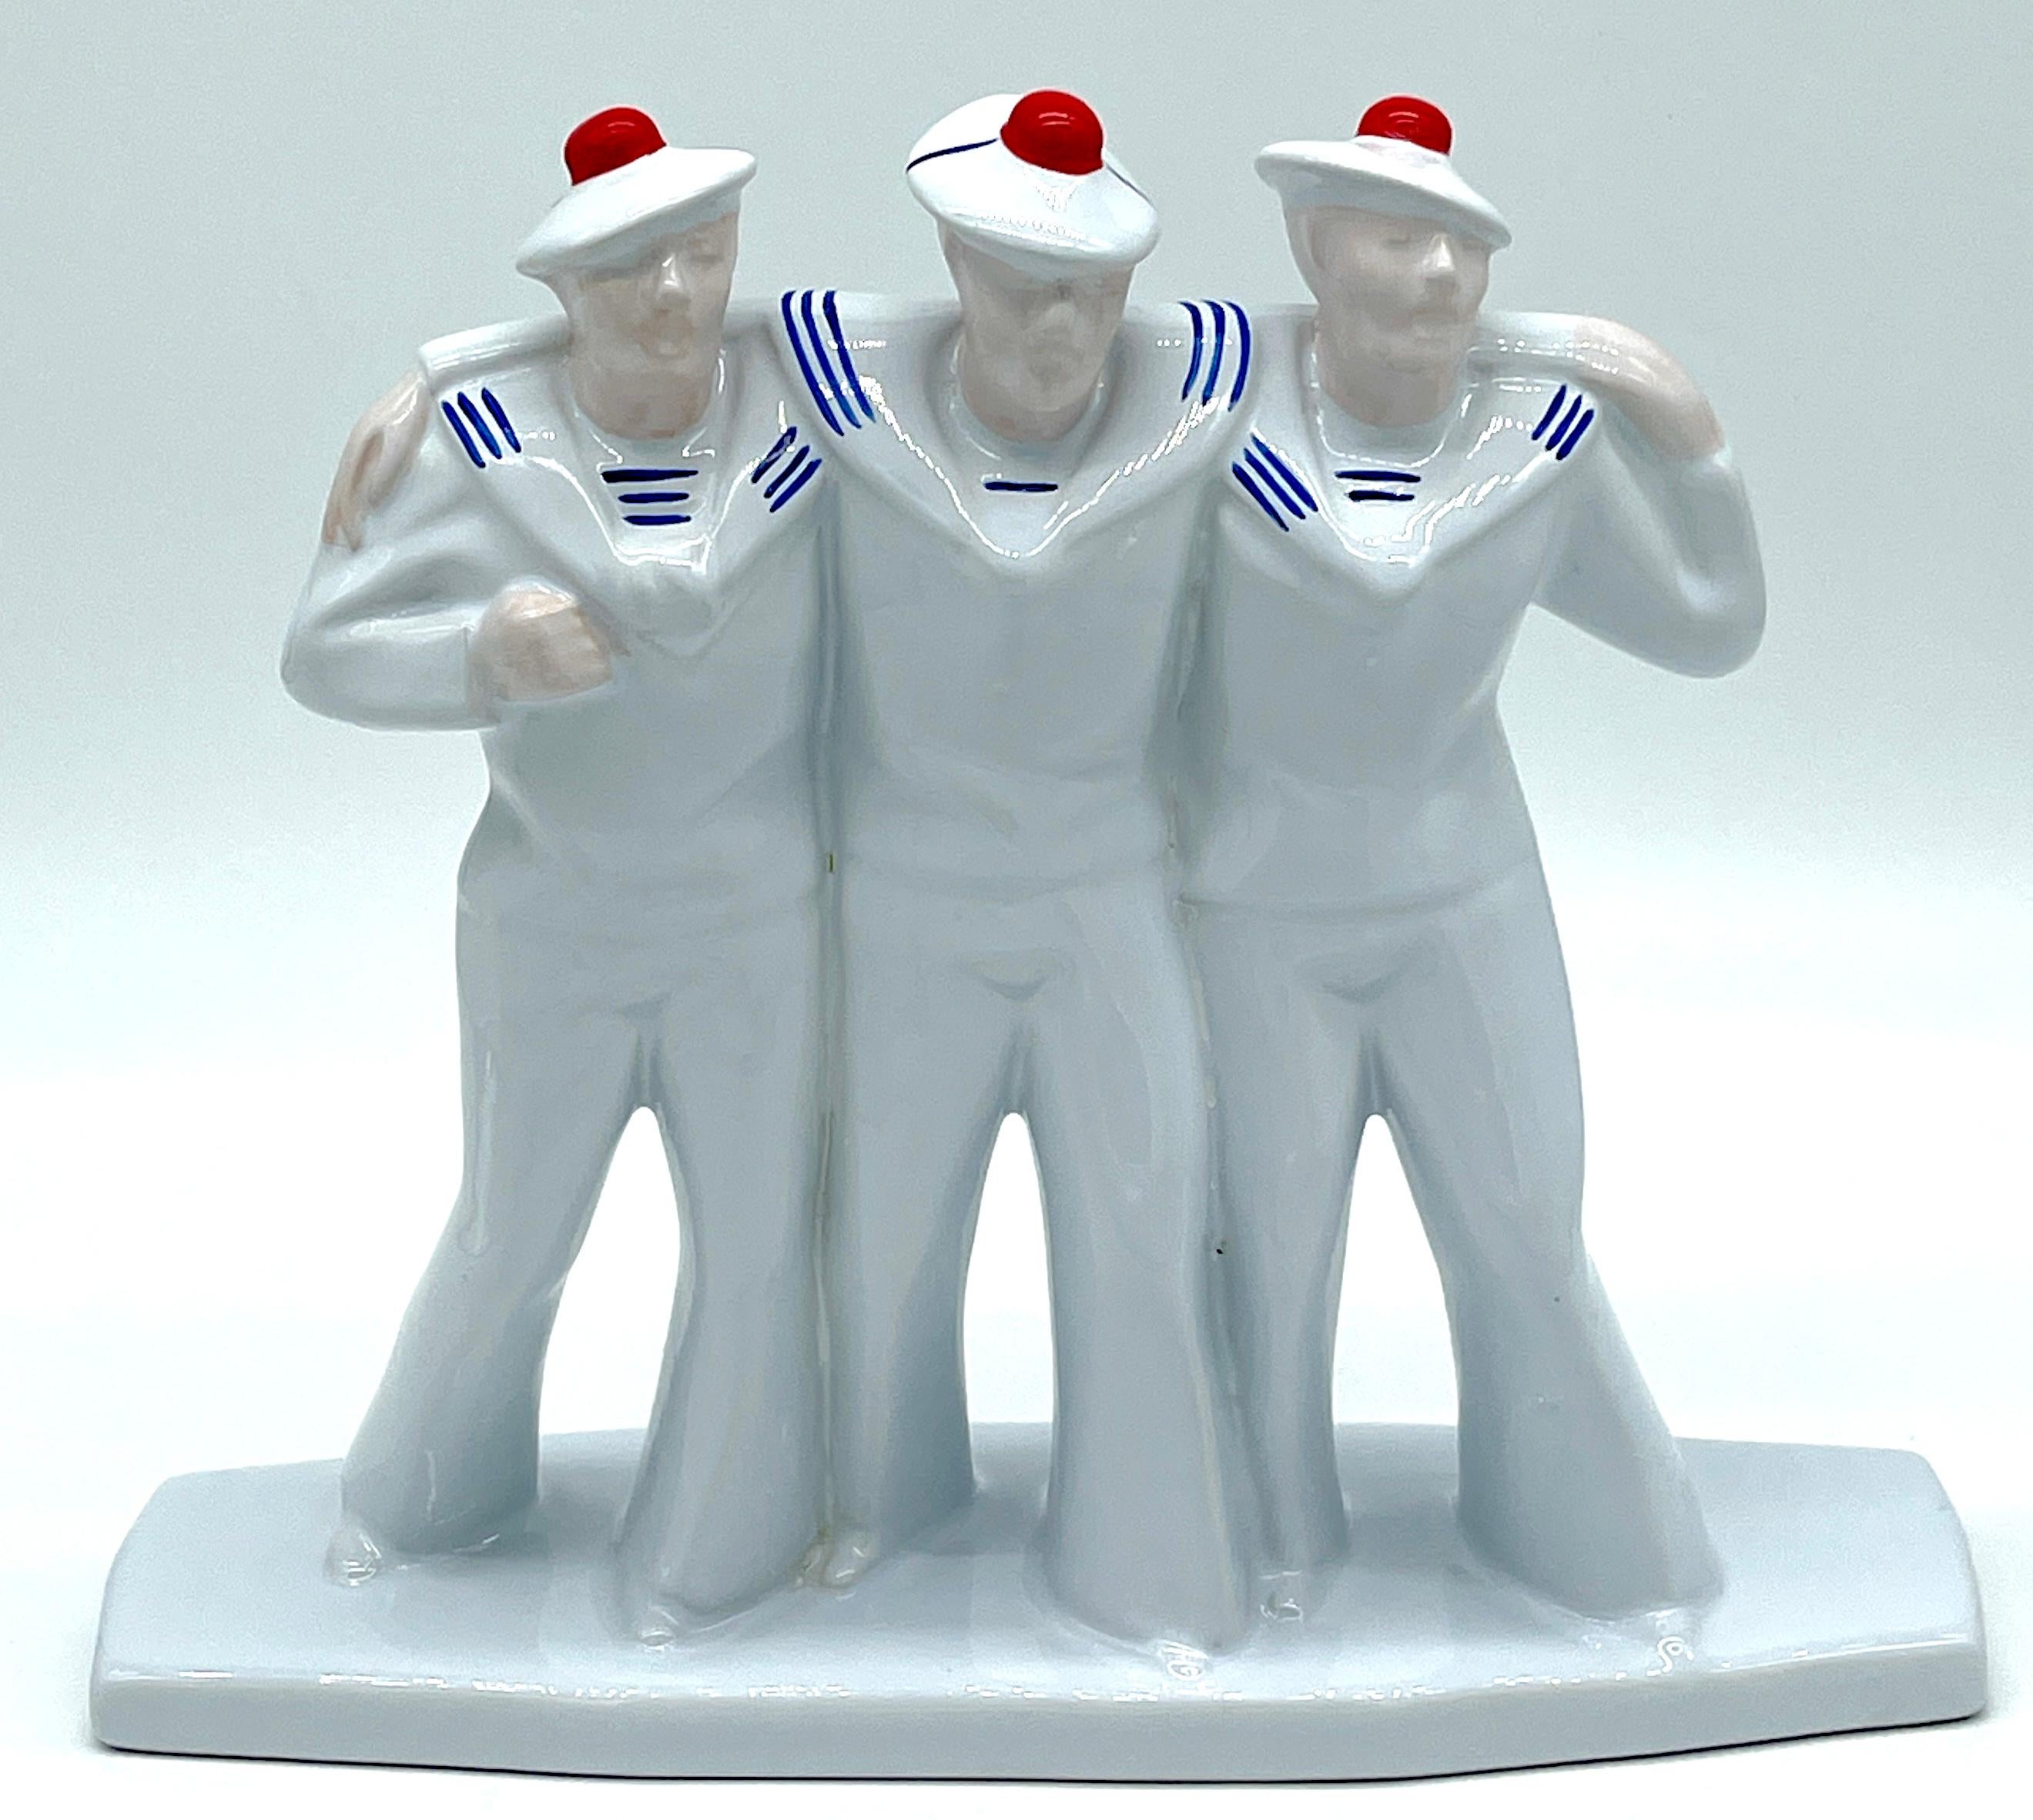 Art Deco Porcelain Sculpture 'Three Drunken Sailors' by Edouard Cazaux for DAX
Edouard Cazaux (French, 1889–1974)
France, 1930s 

A fine French porcelain sculpture, 'Three Drunken Sailors,' is a testament to the mastery of French Art Deco artist